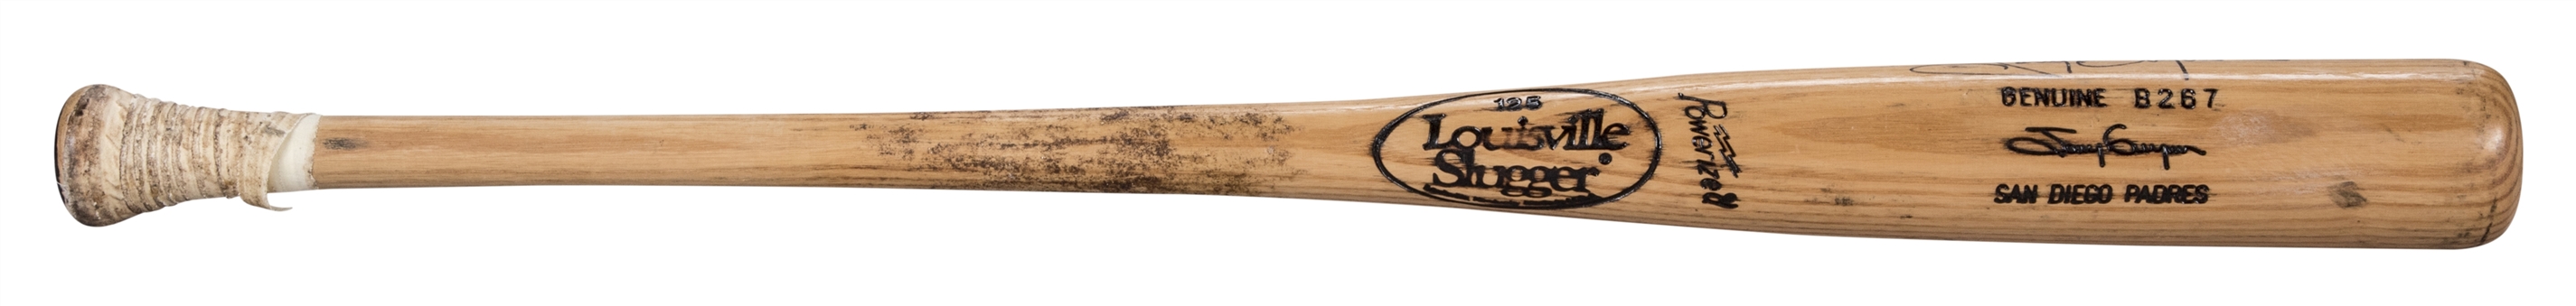 1997 Tony Gwynn Game Used and Signed Louisville Slugger B267 Bat for Hit #2727 (PSA/DNA GU 10)